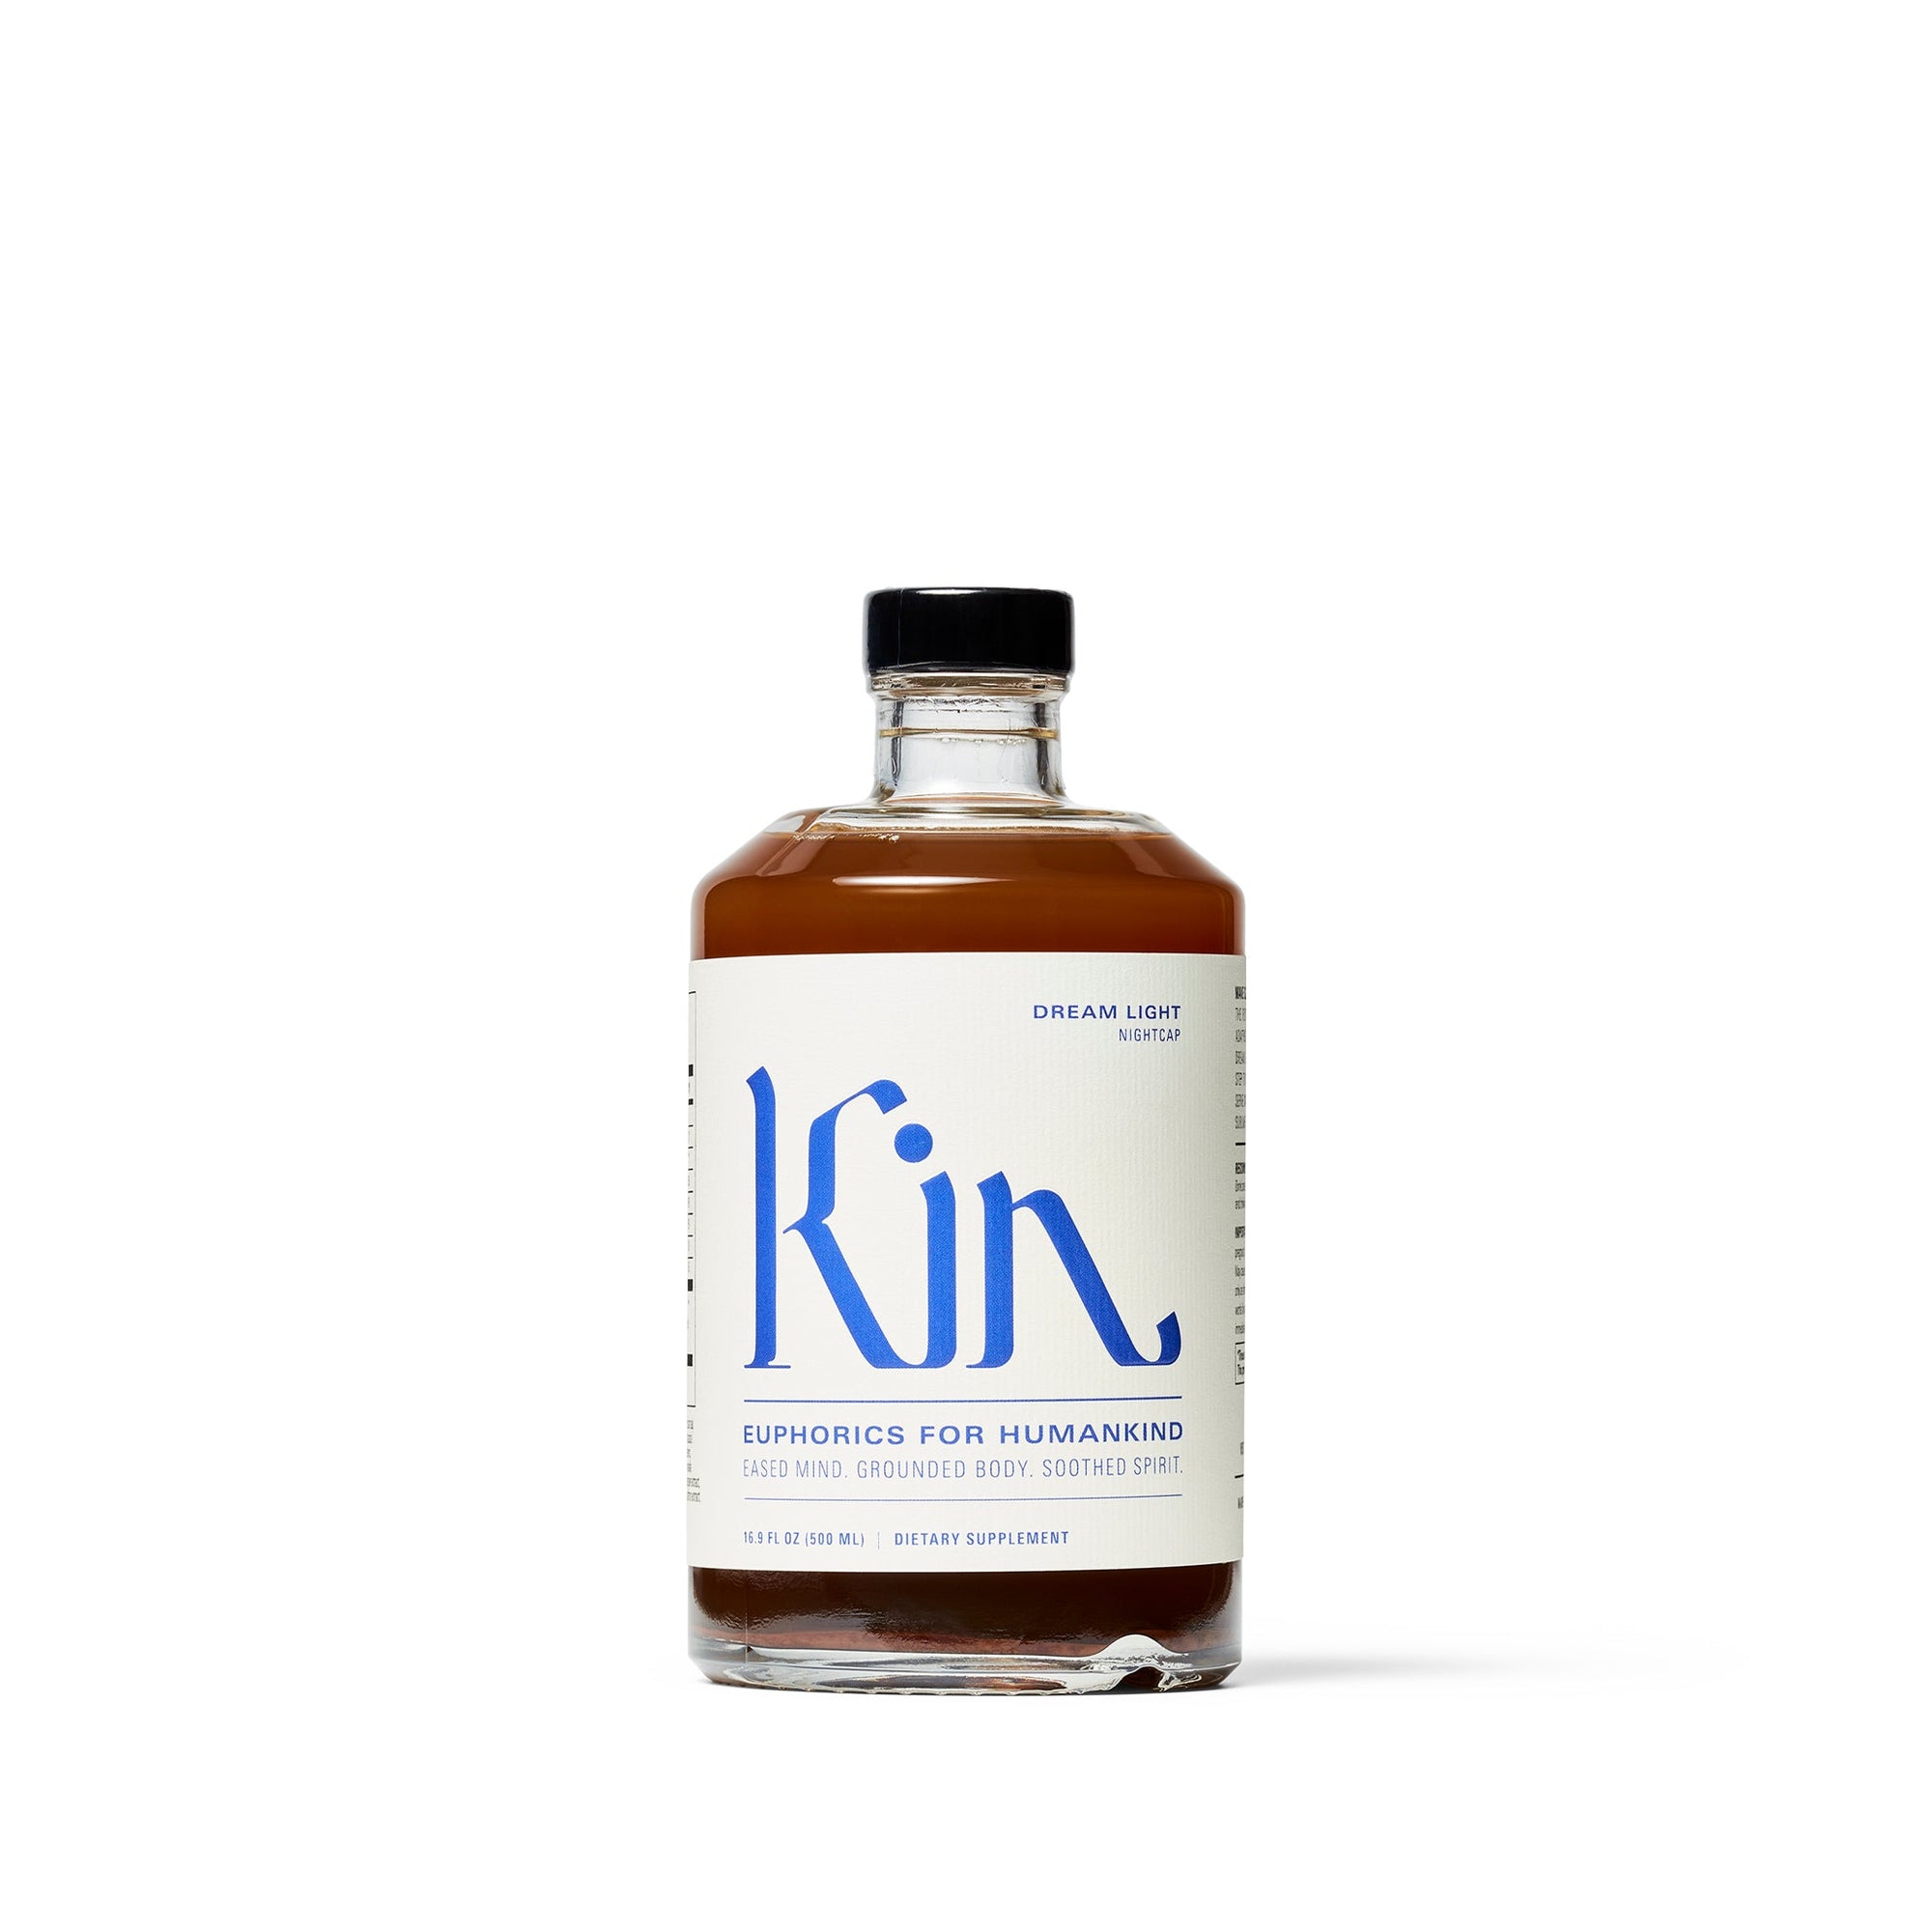 Kin Euphorics - Dream Light Nightcap - Non-Alcoholic Beverage - Boisson